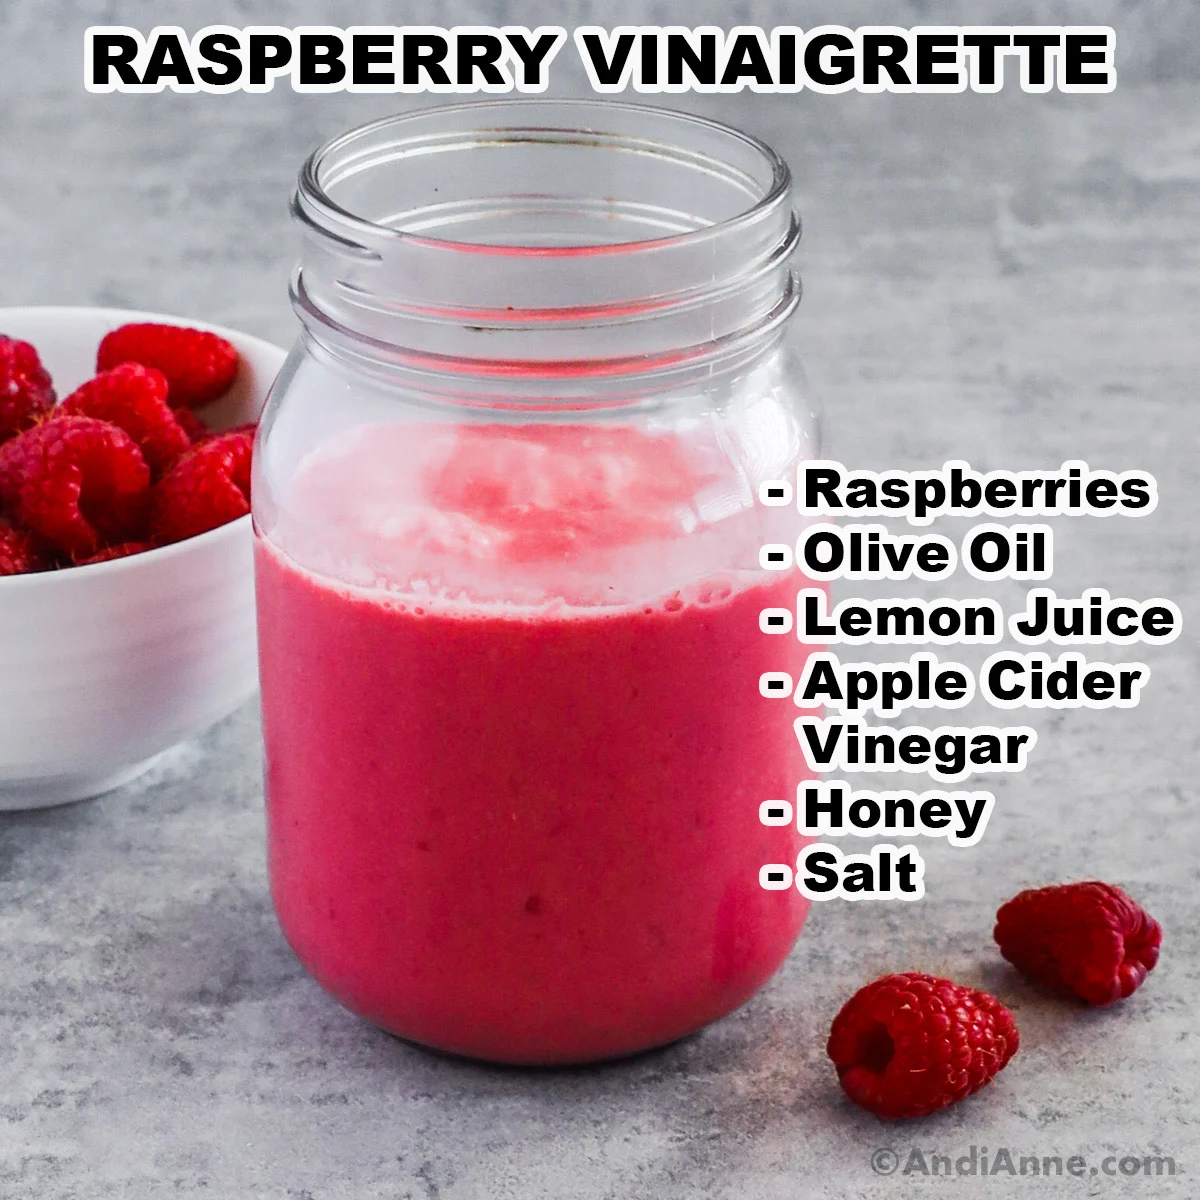 A mason jar of raspberry vinaigrette with a bowl of fresh raspberries and a list of ingredients including raspberries, olive oil, lemon juice, apple cider vinegar, honey and salt.